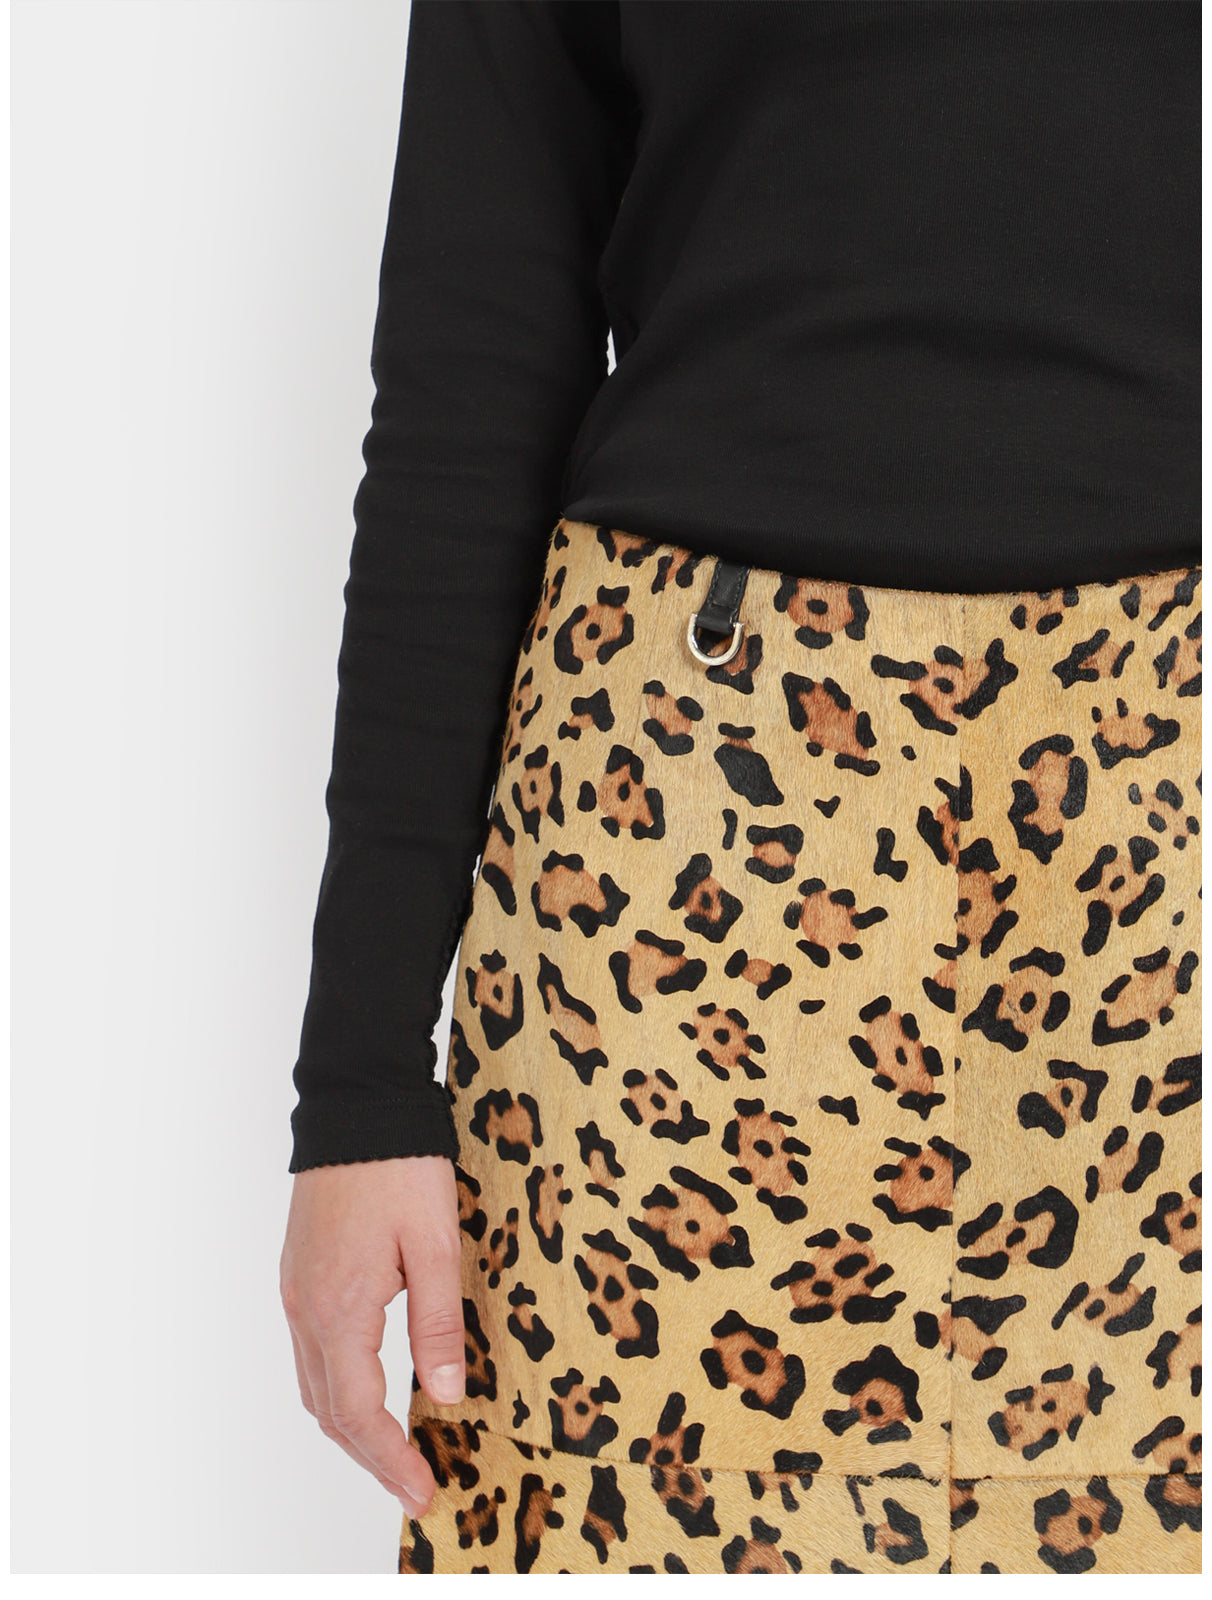 Topshop | Skirts | Top Shop Leopard Print Mini Skirt Size Small Or Size 2 |  Poshmark